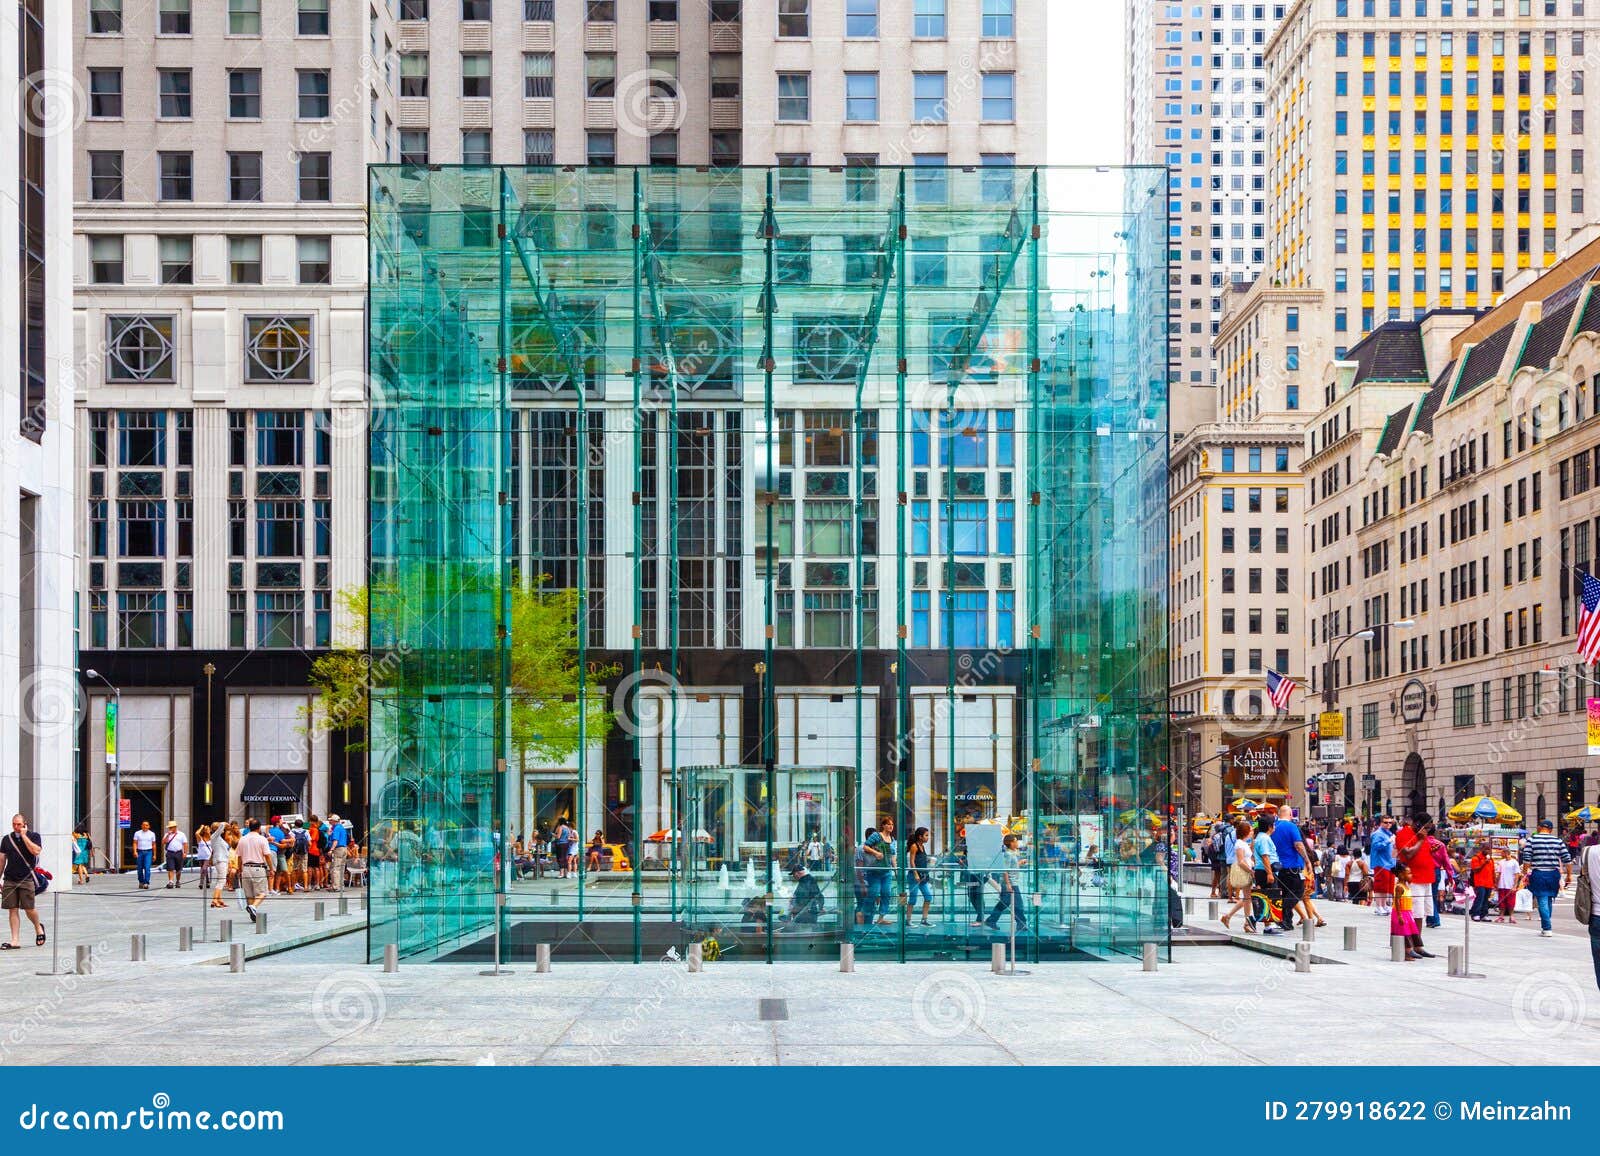 Apple Store, Fifth Avenue – Bohlin Cywinski Jackson